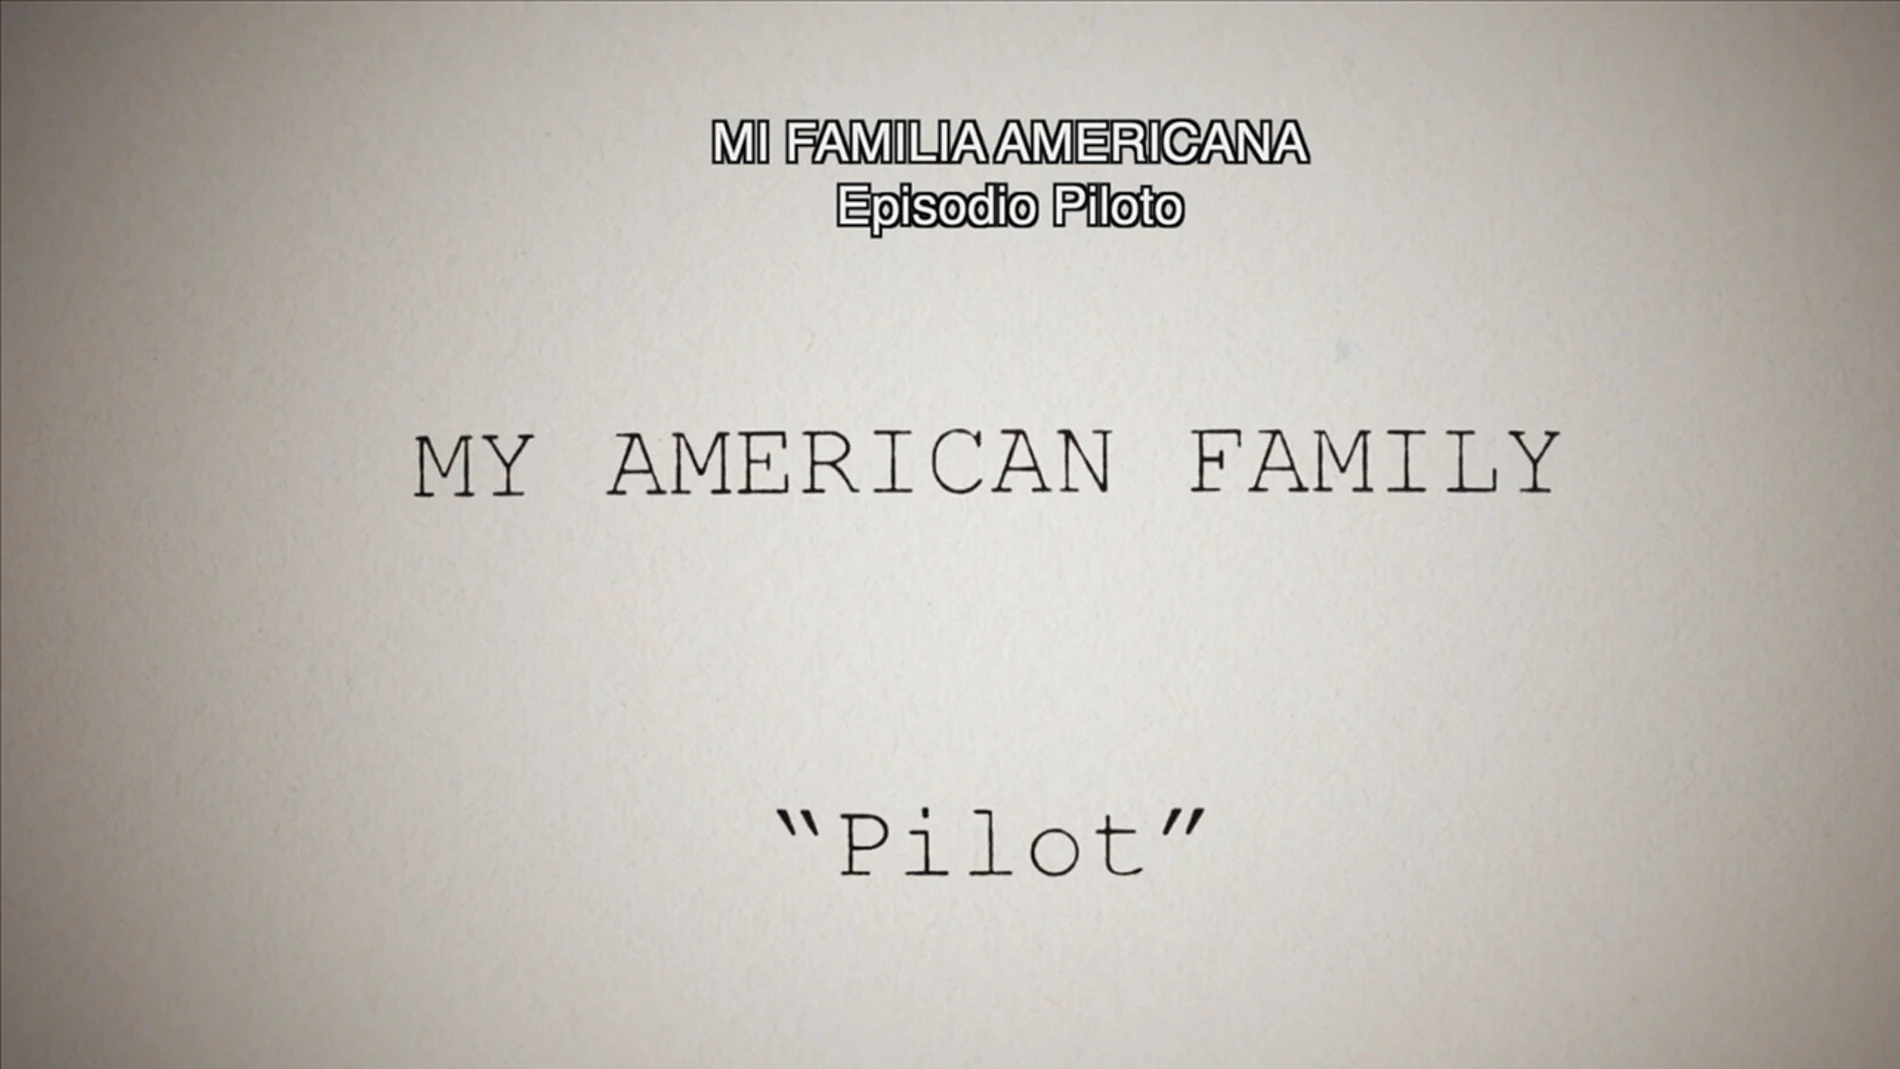 El piloto de Mi familia americana